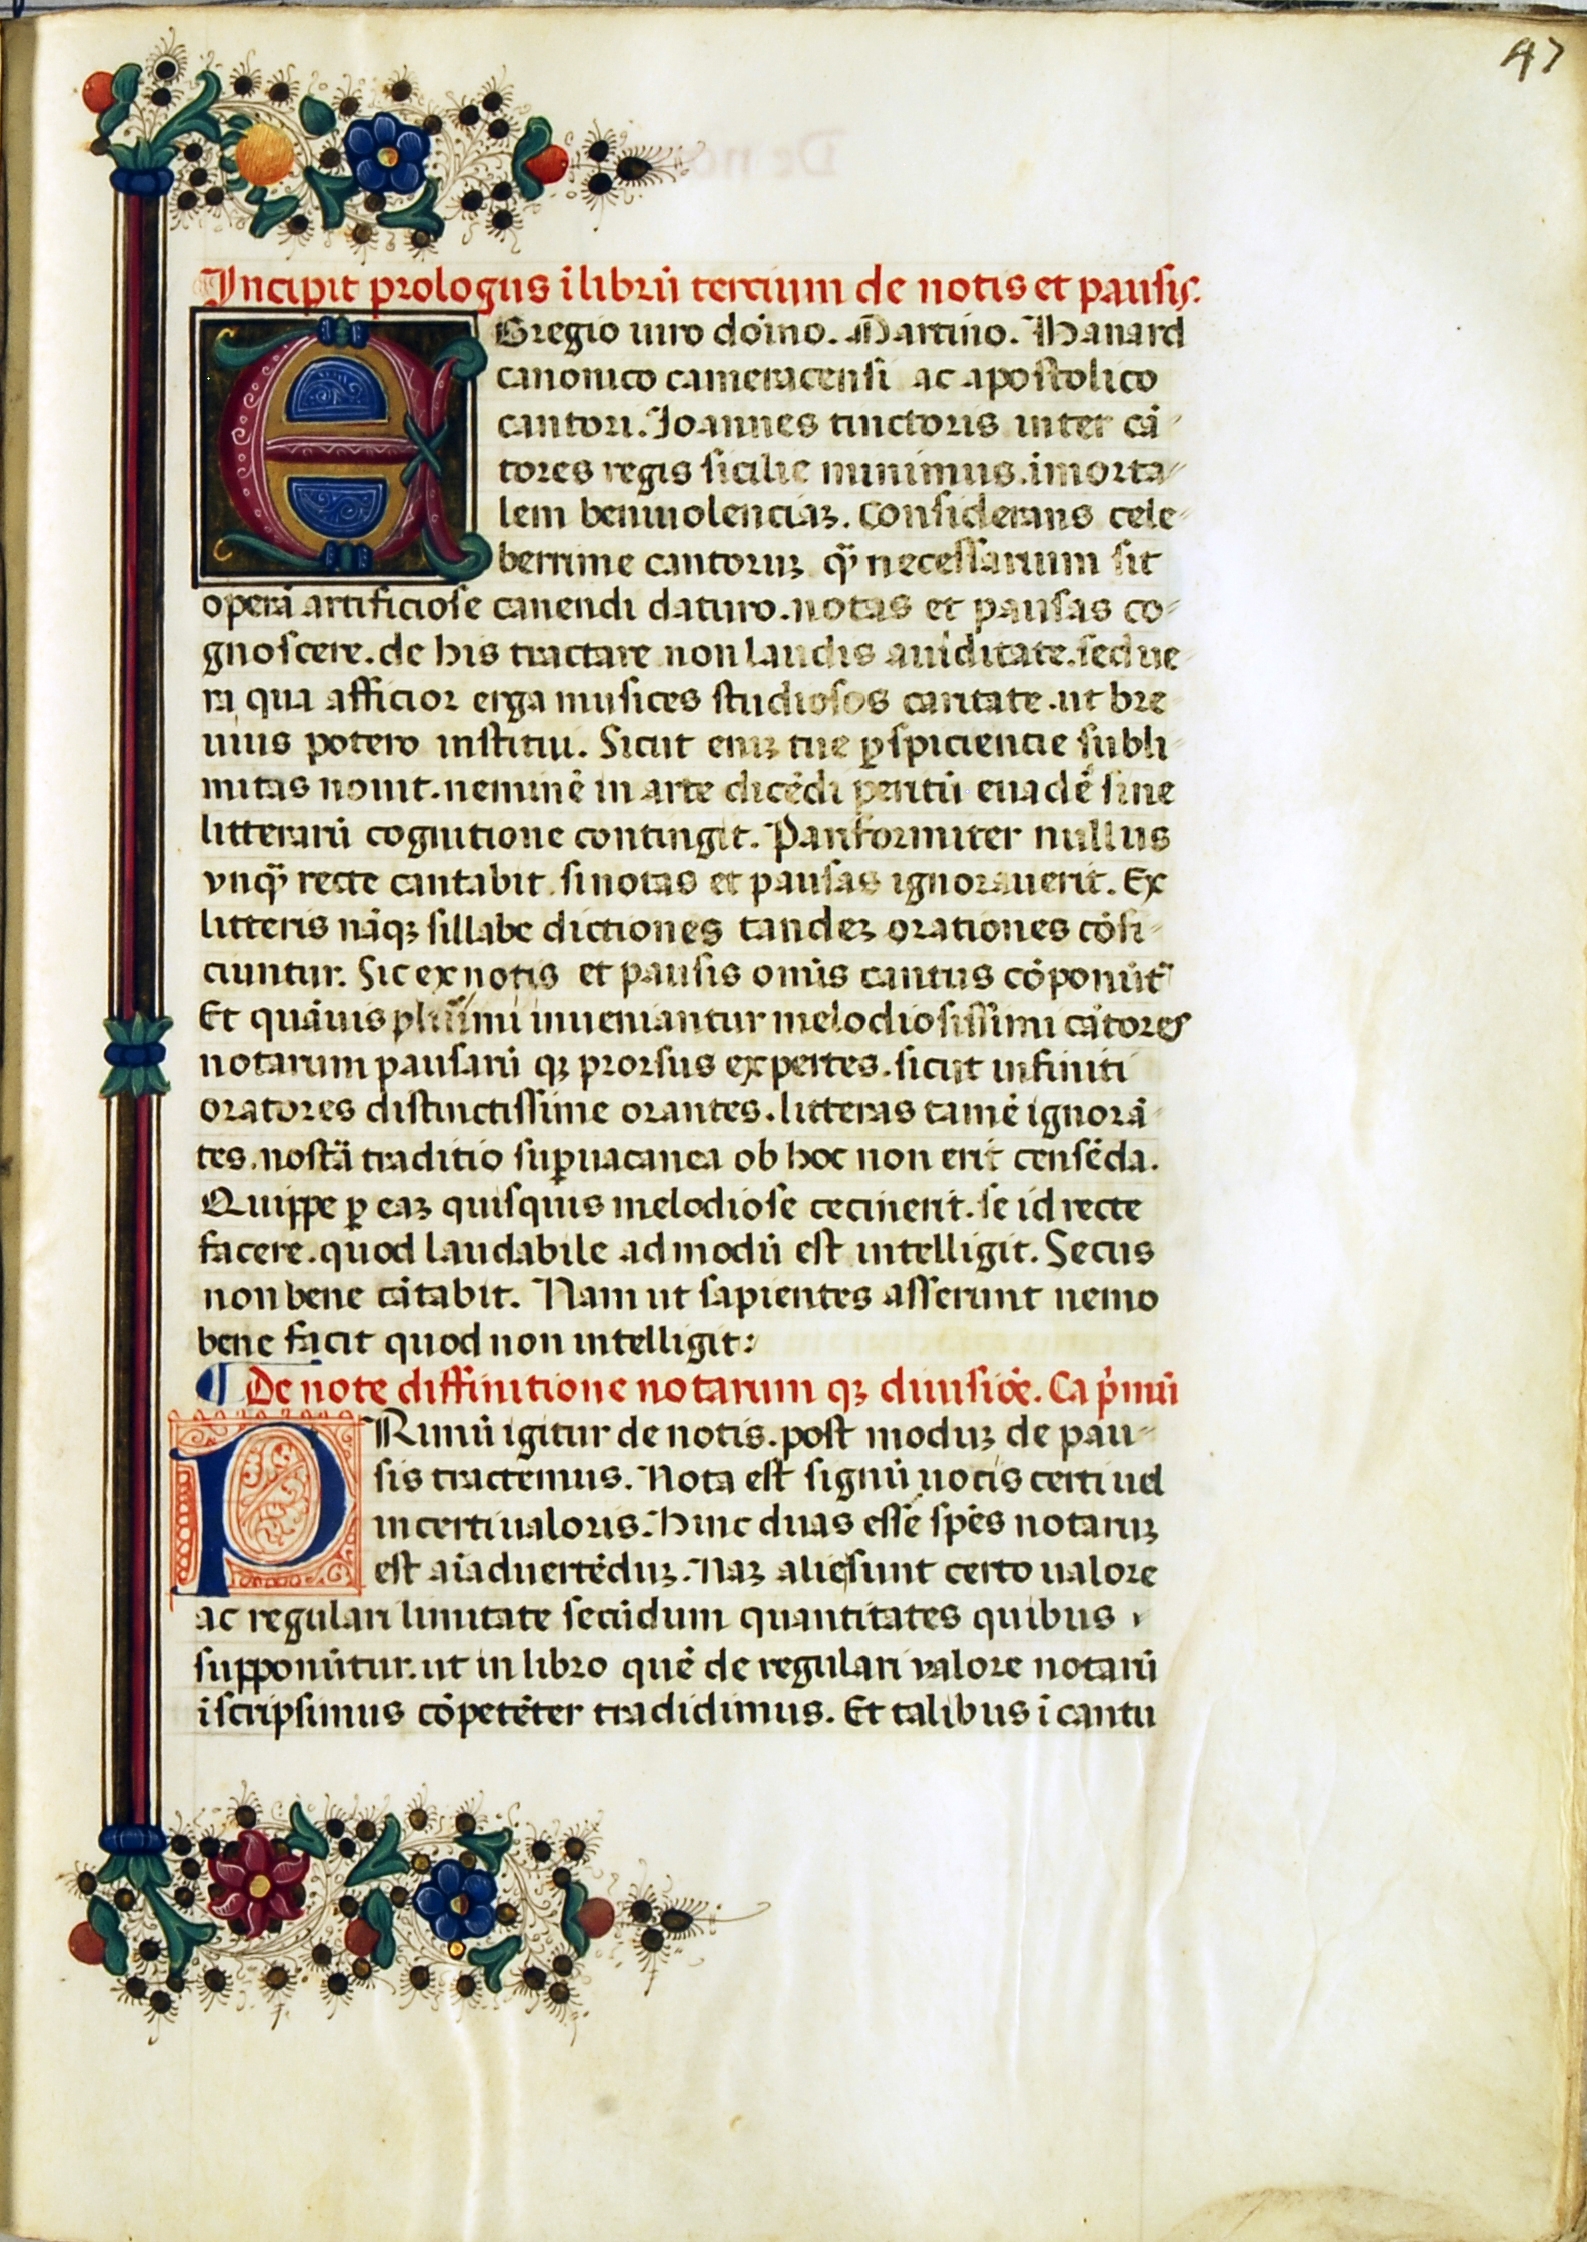 Bologna, Biblioteca Universitaria, MS 2573, fol. 47r. Source: Biblioteca Universitaria, Bologna.